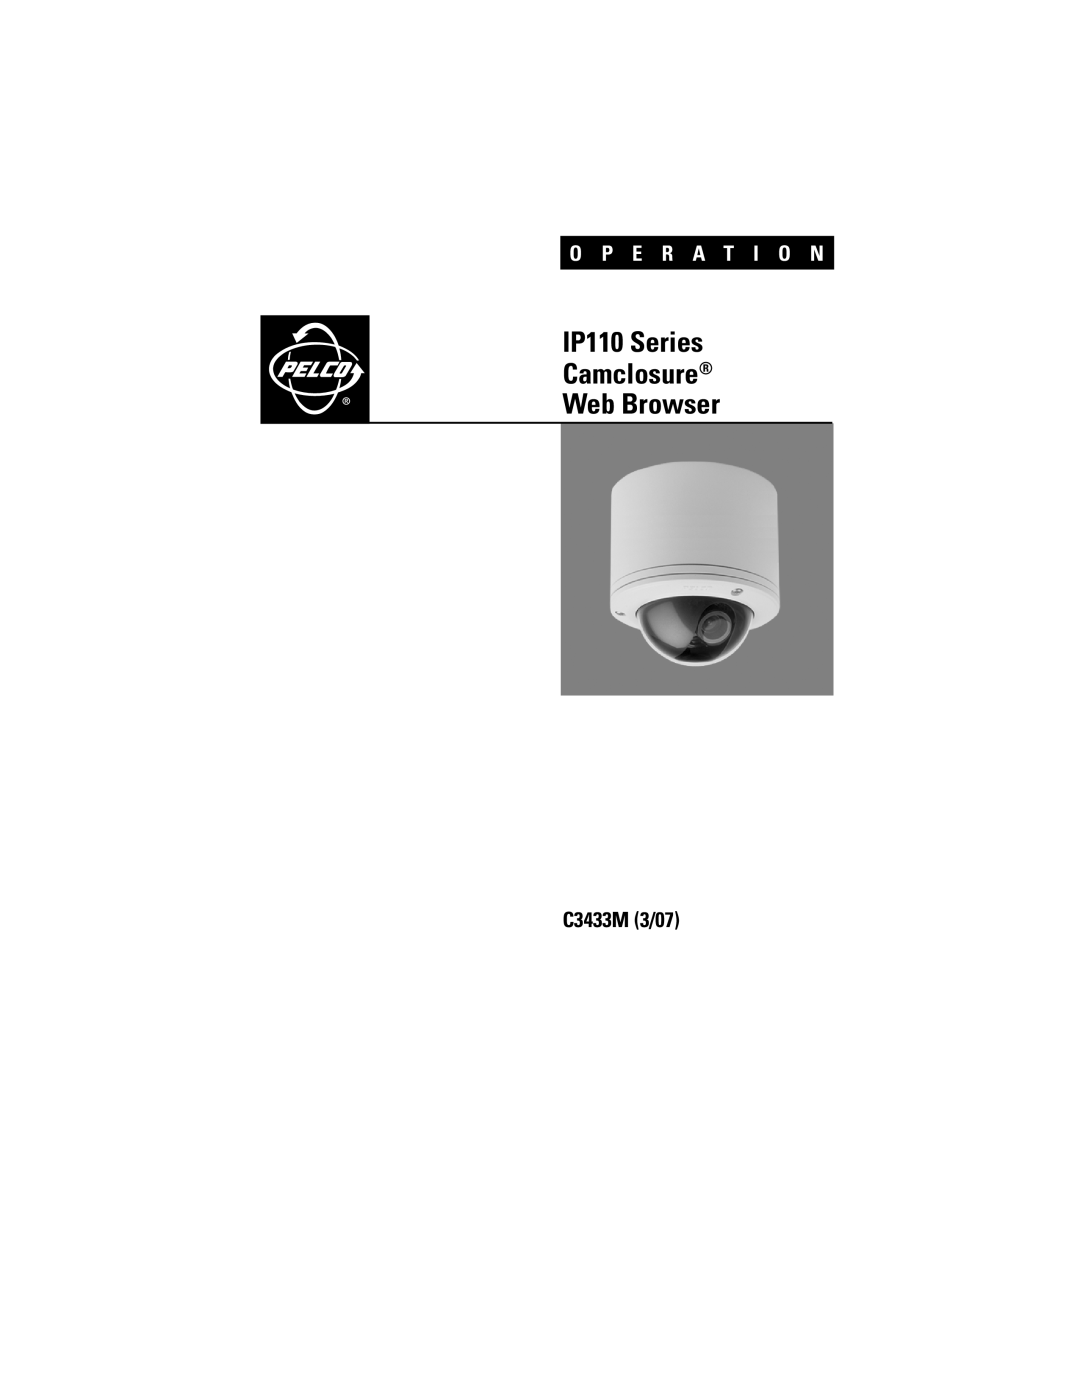 Pelco C3433M (3/07) manual IP110 Series Camclosure Web Browser, C3433M 3/07, O P E R A T I O N 